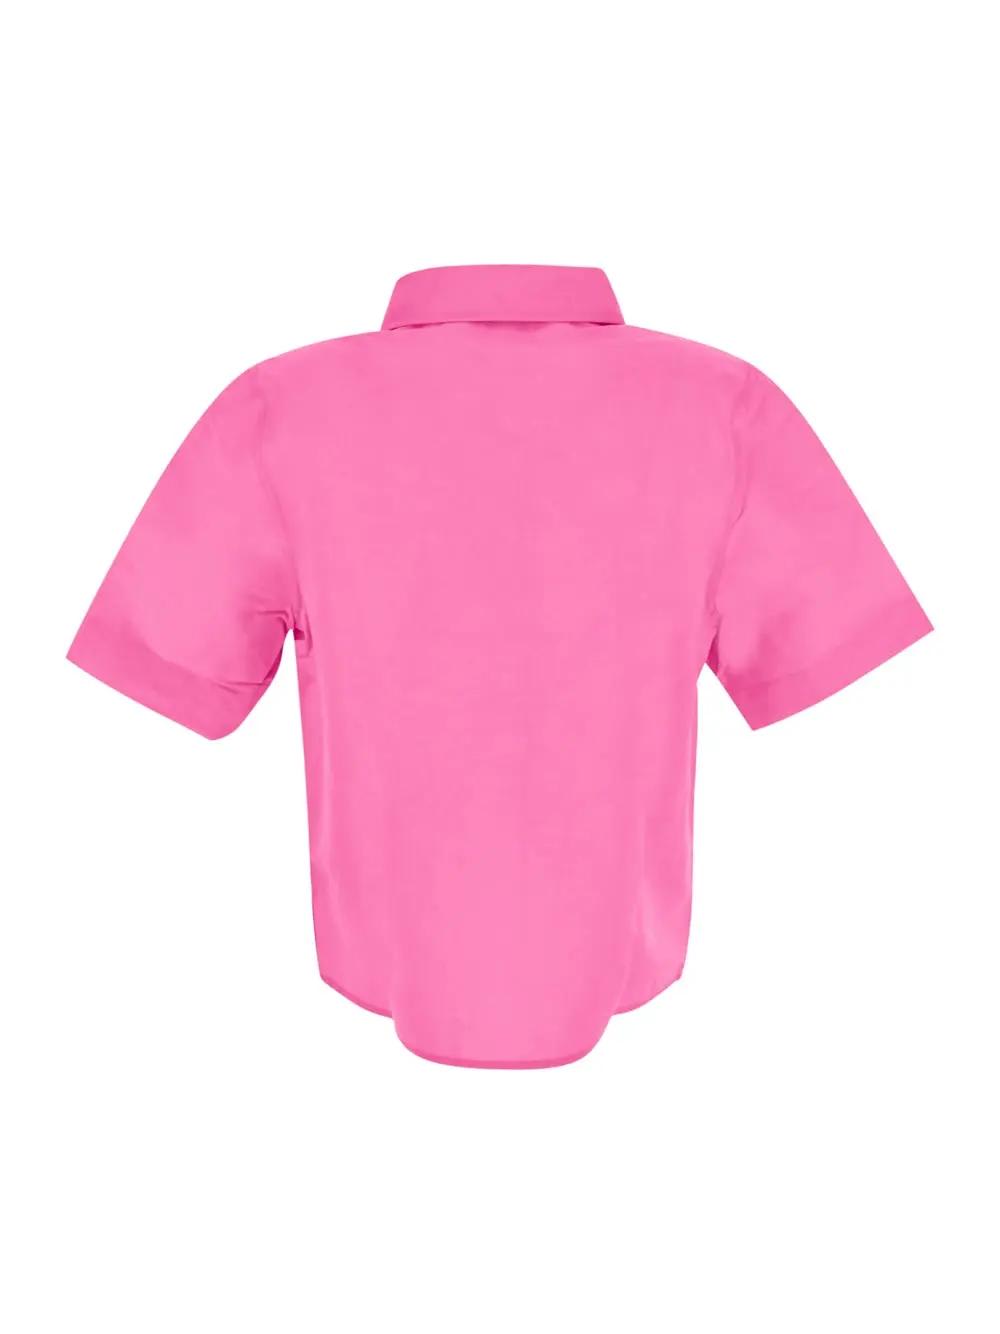 Shop Lido Cropped Shirt In Pink